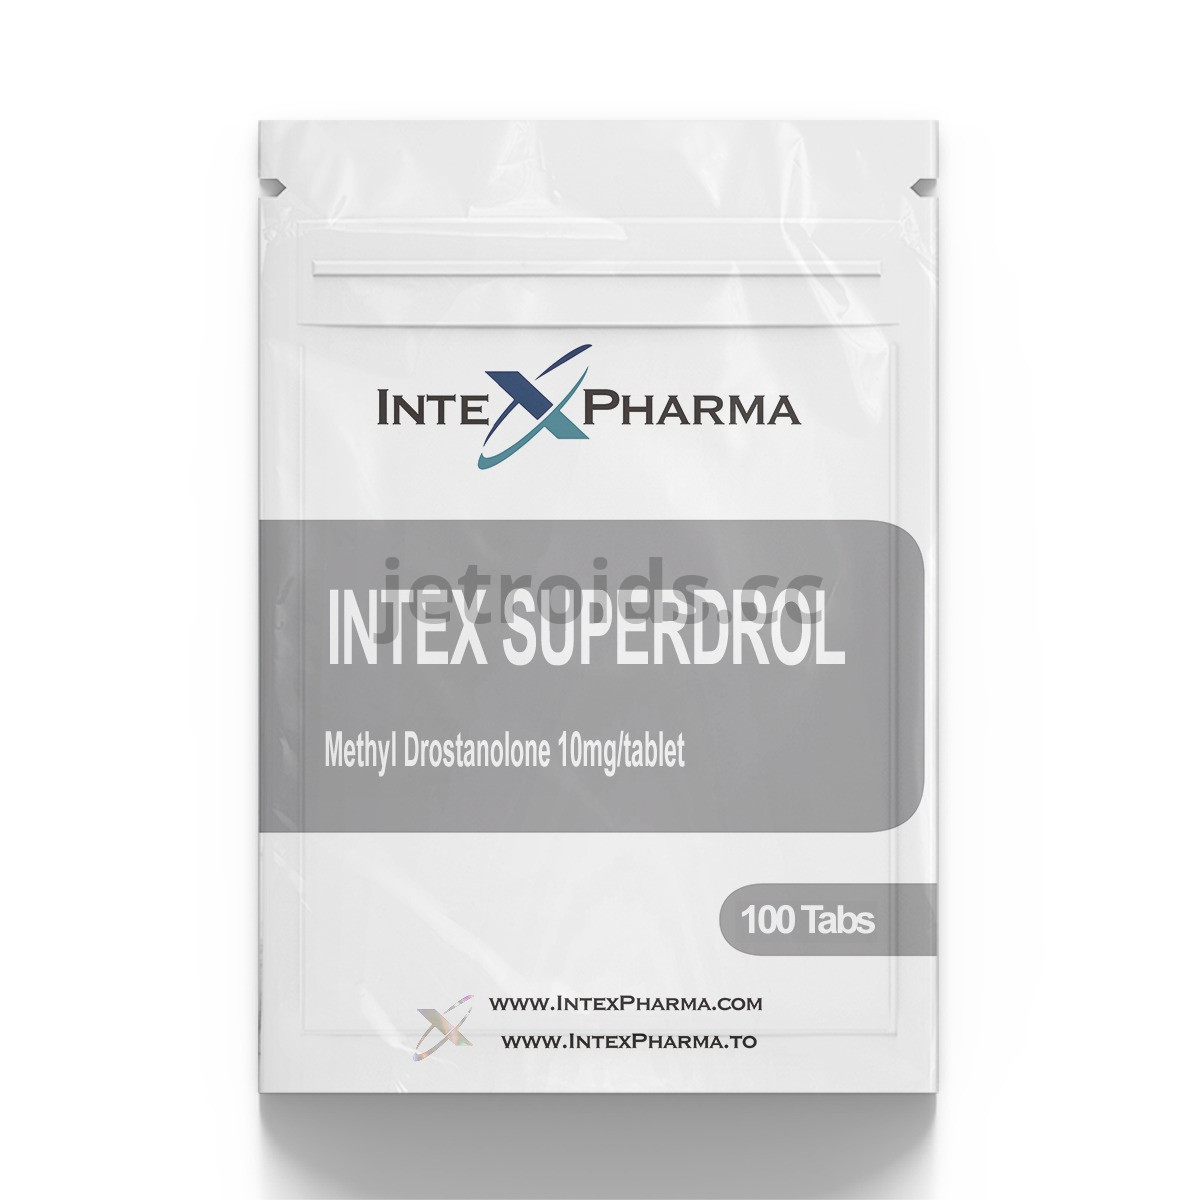 IntexPharma Intex Superdrol Product Info